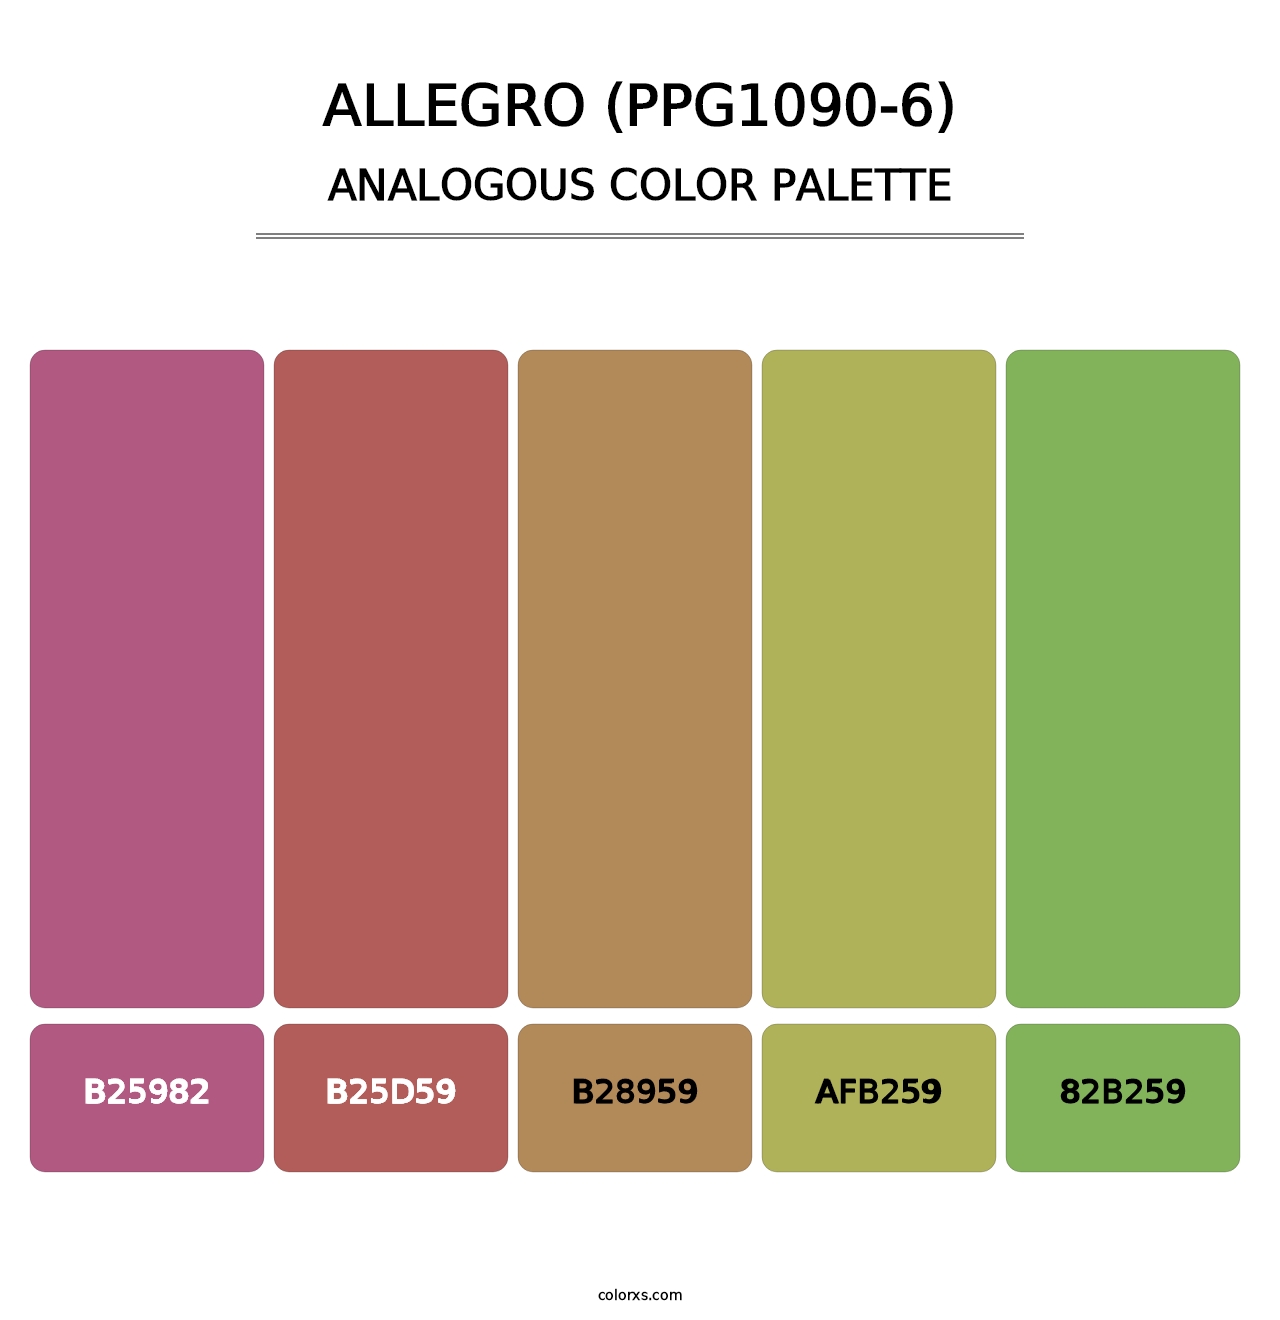 Allegro (PPG1090-6) - Analogous Color Palette